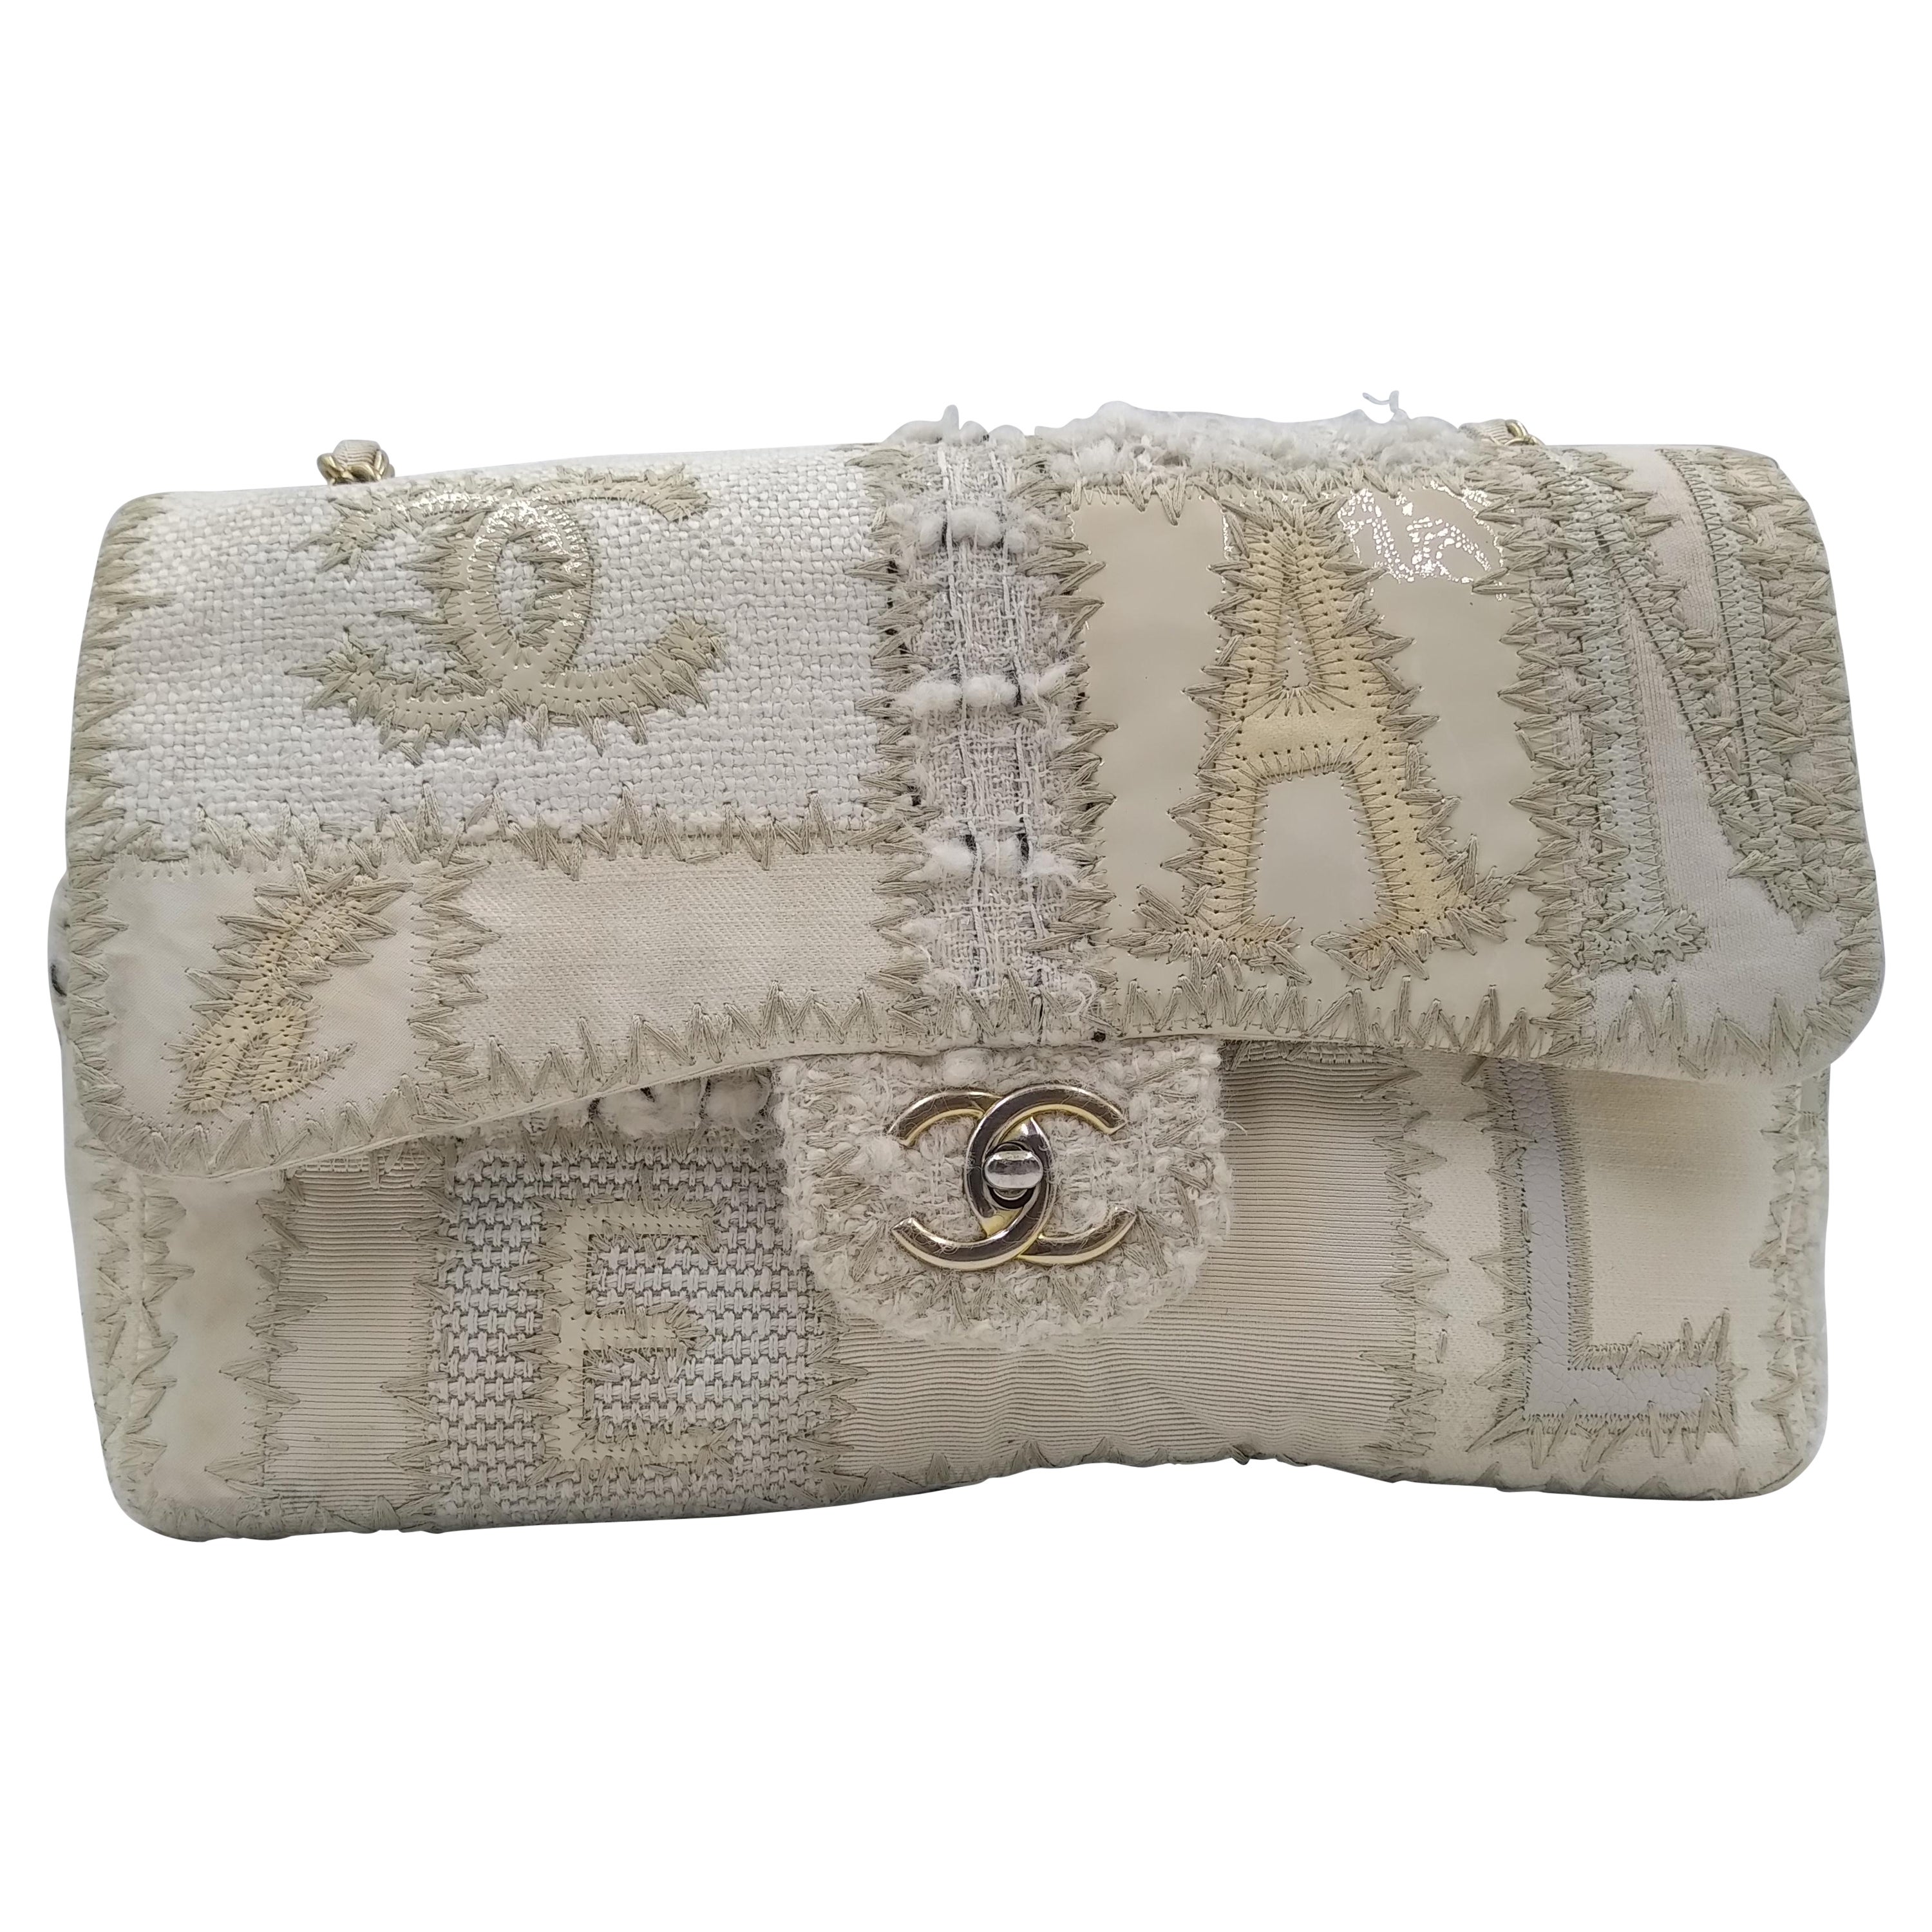 tweed chanel handbag white